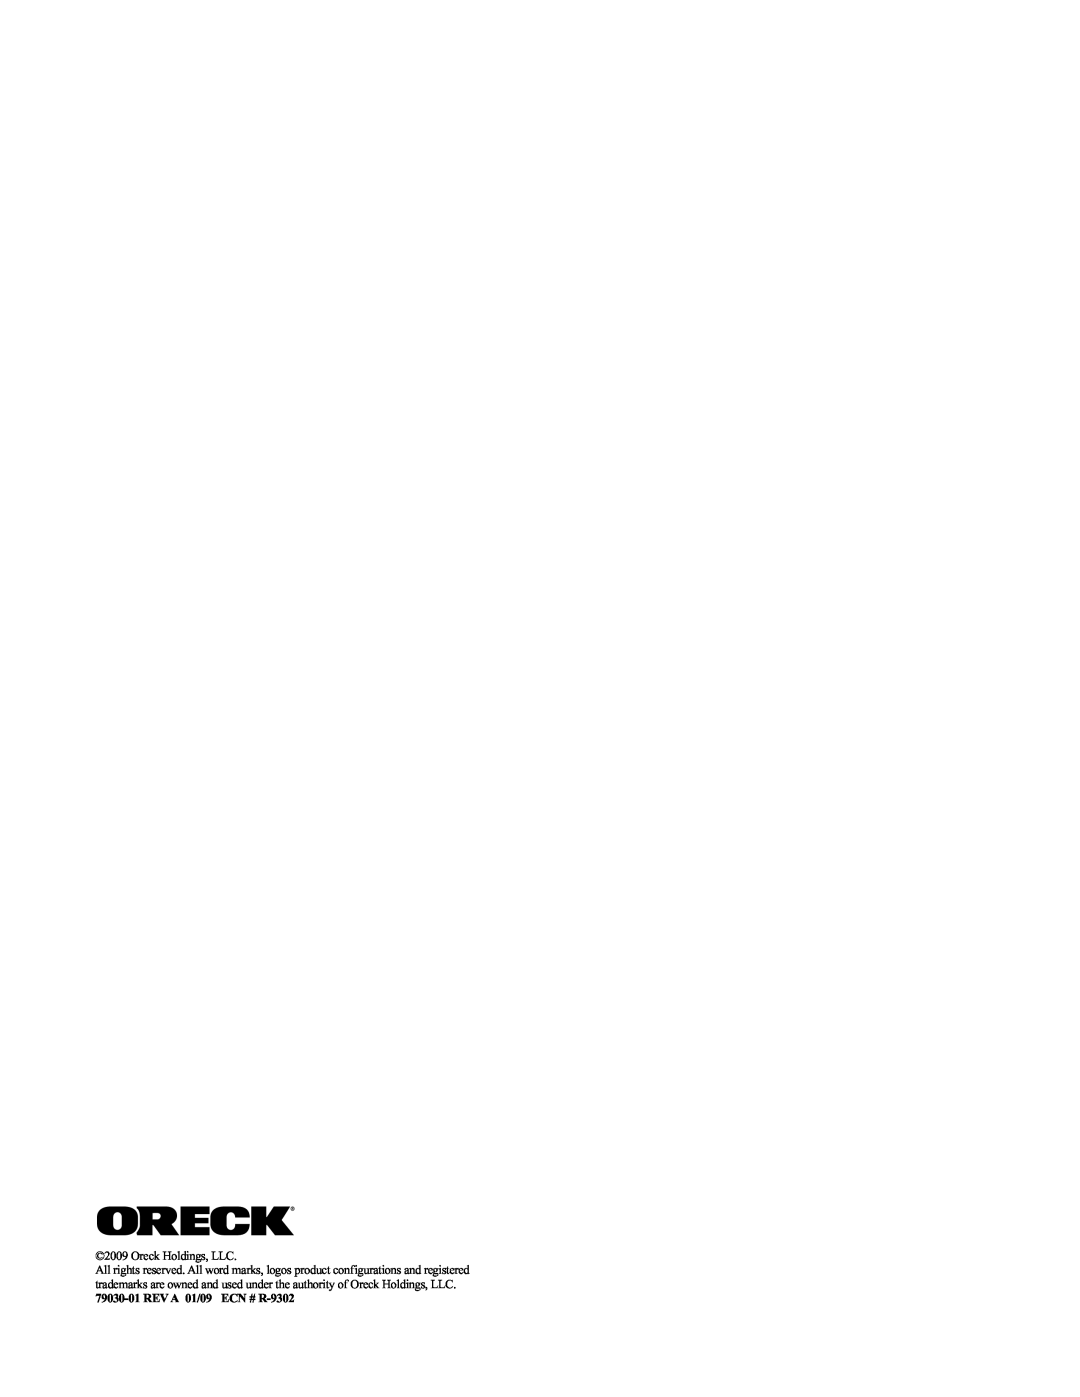 Oreck 79030-01REVA manual Oreck Holdings, LLC, 79030-01REV A 01/09 ECN # R-9302 